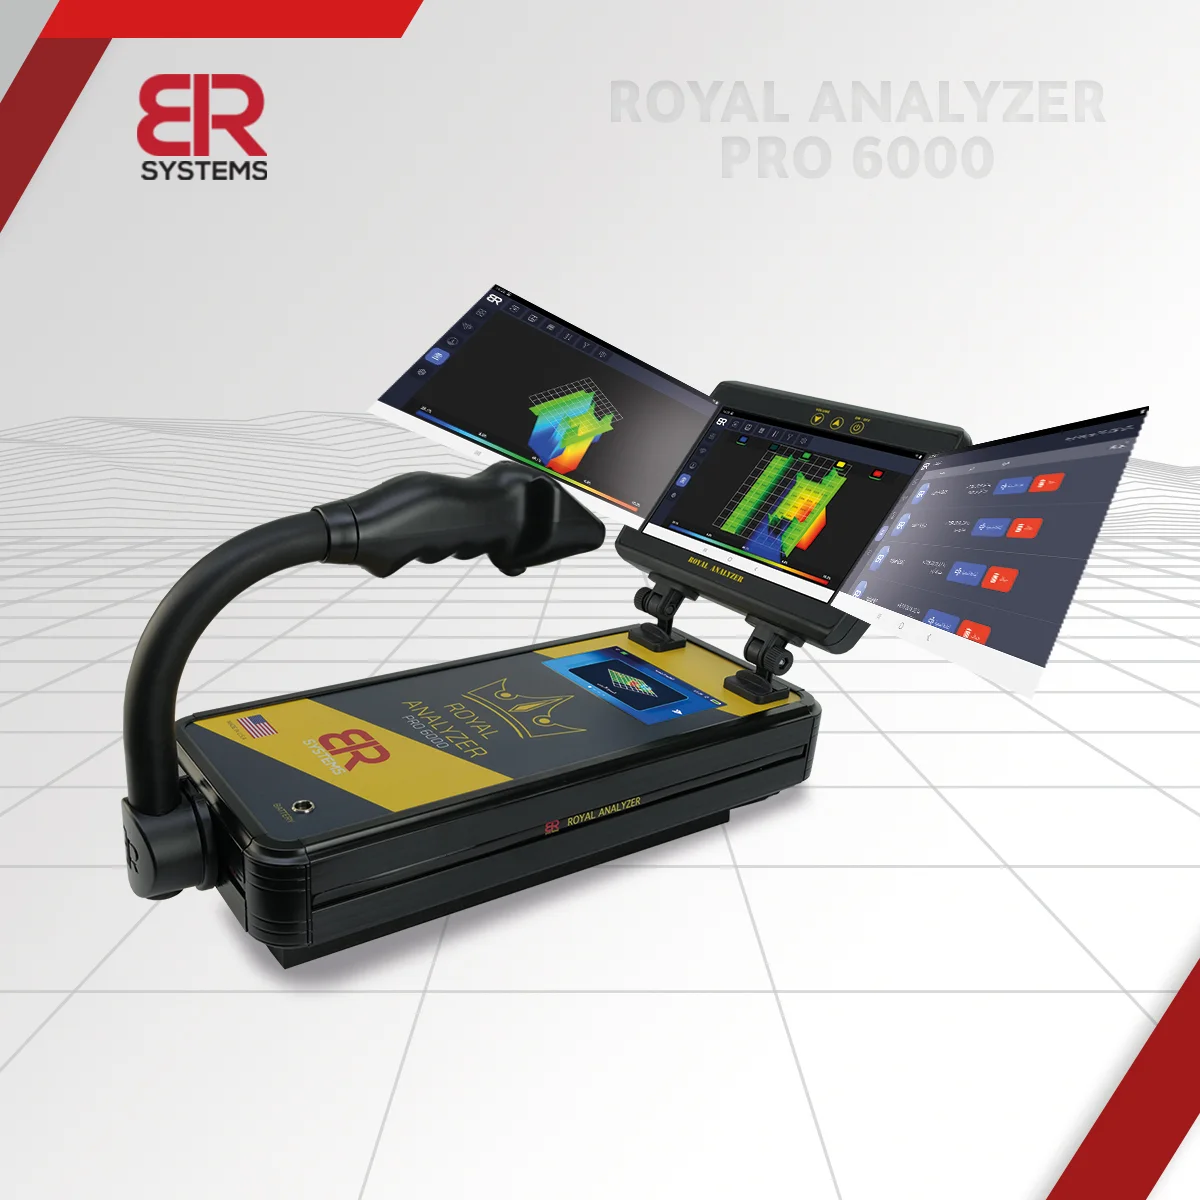 Royal analyzer pro 6000